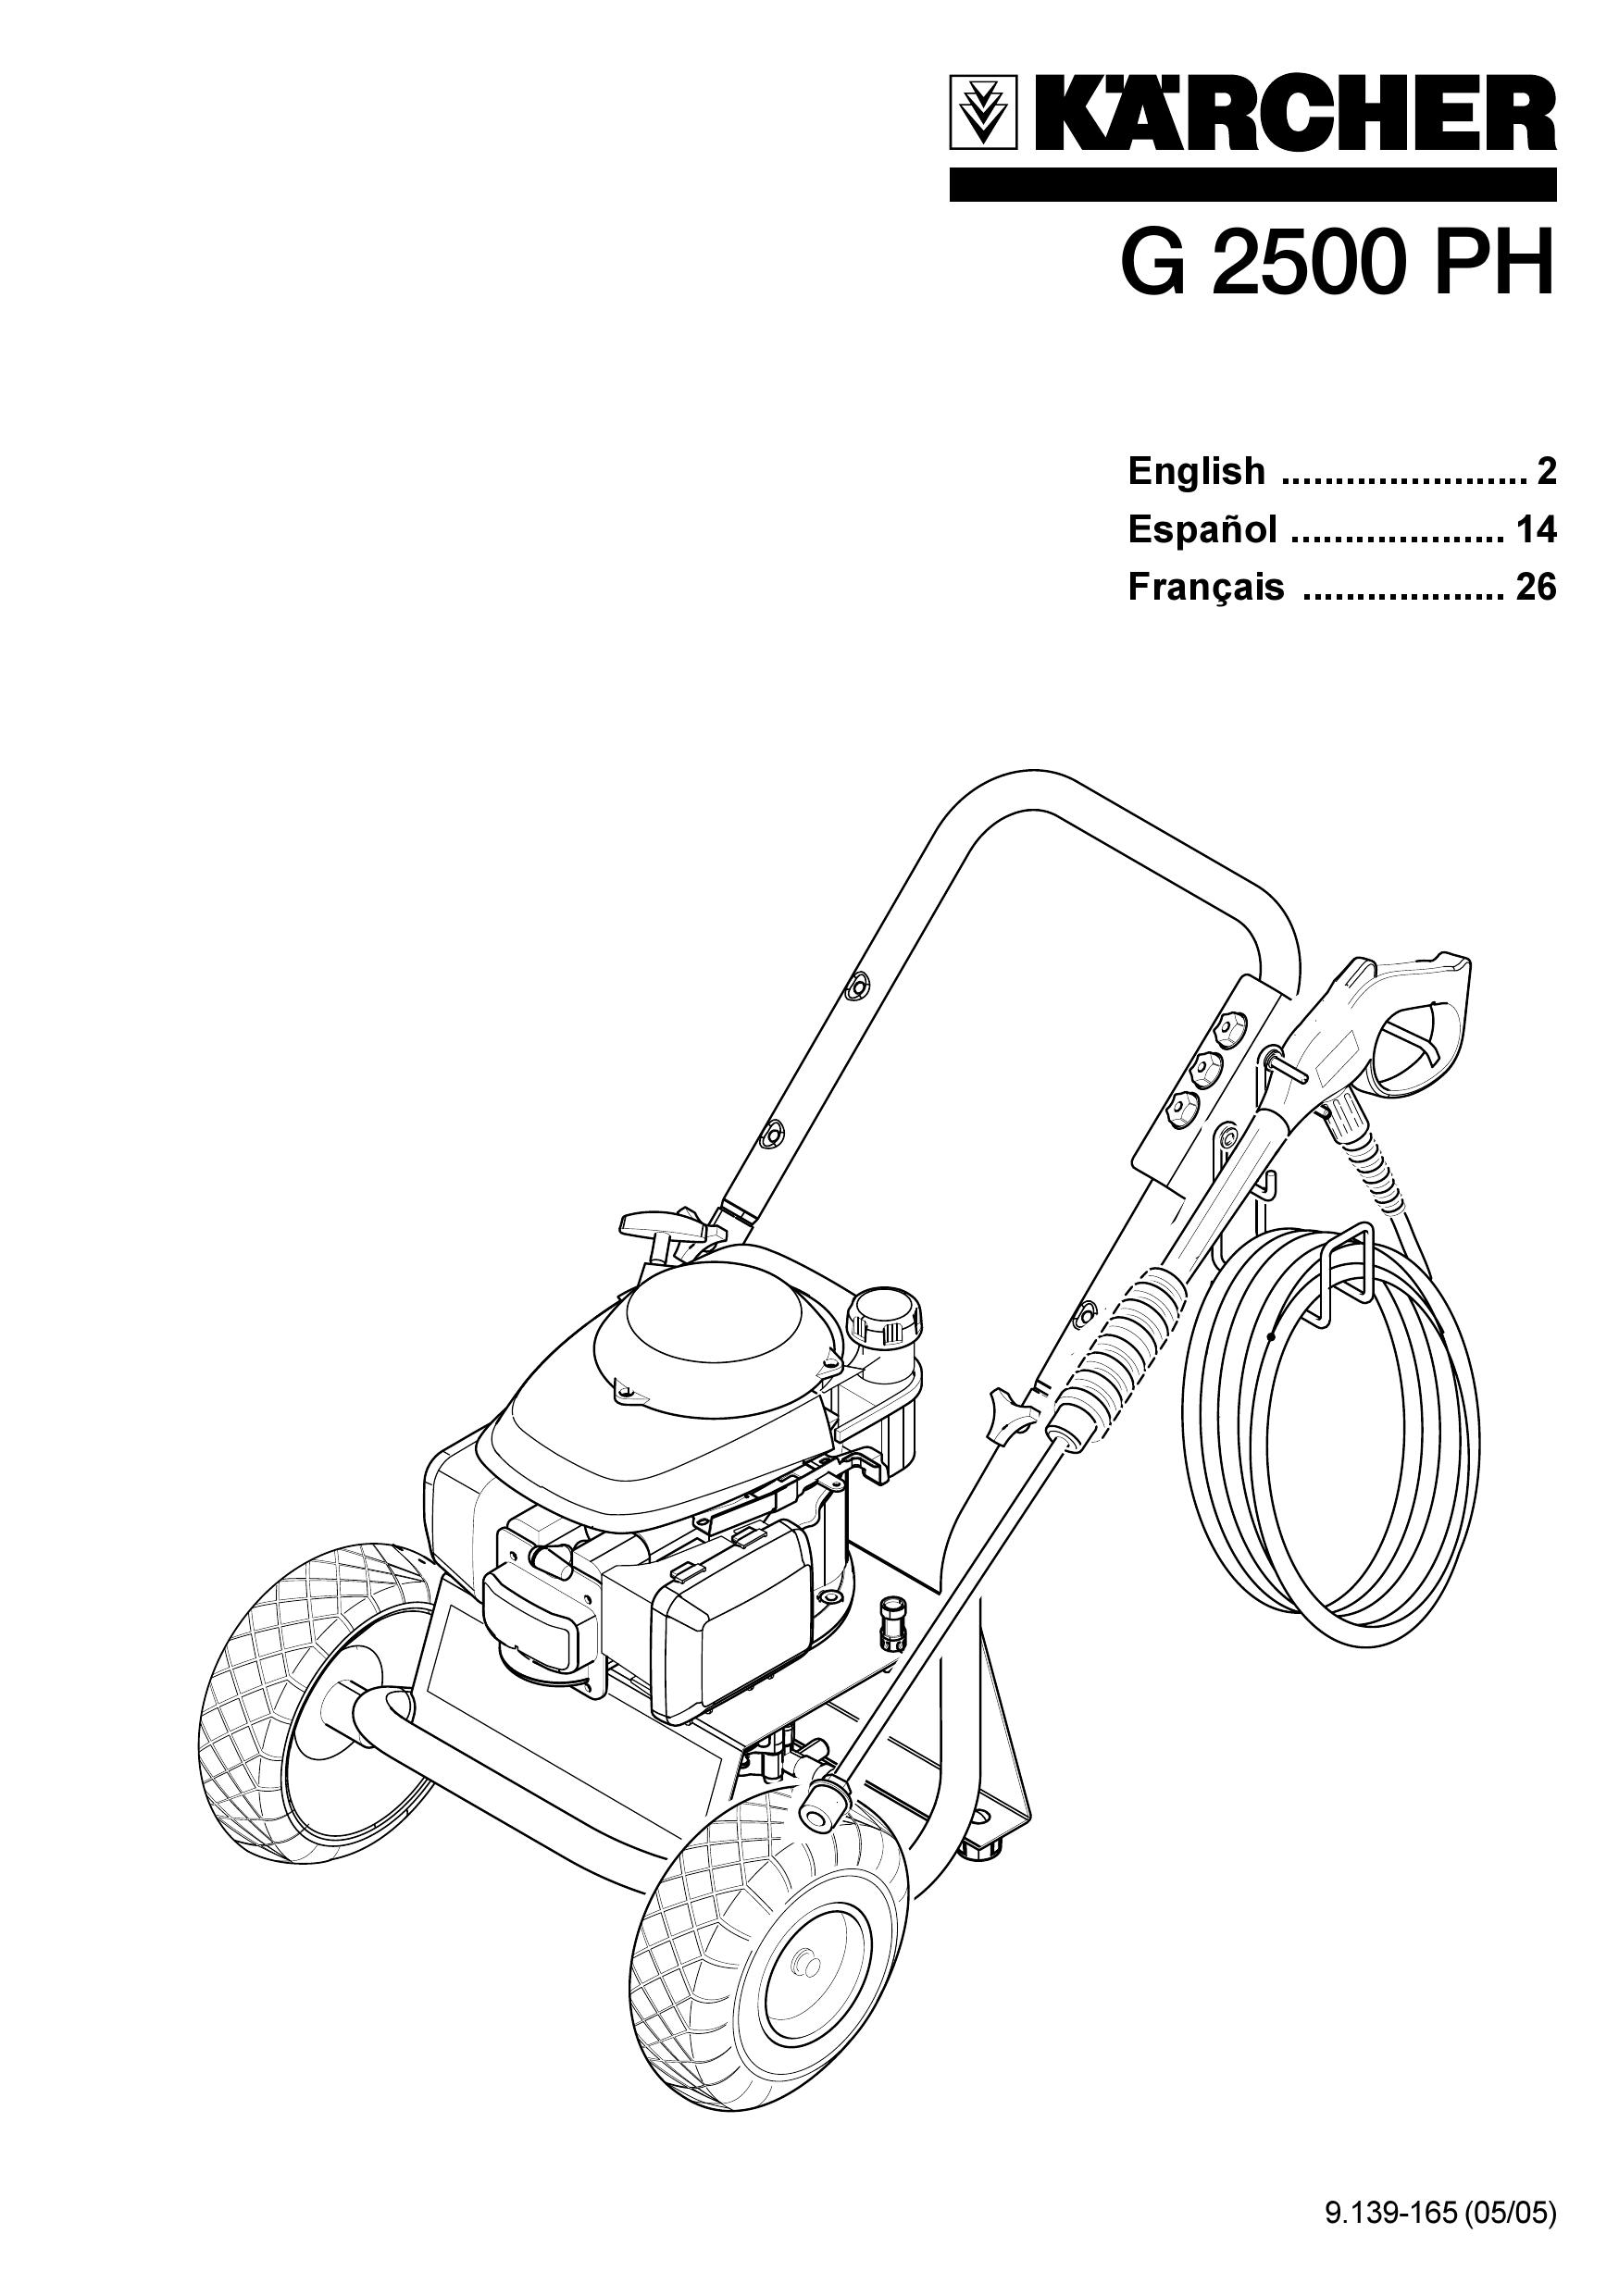 Karcher G 2500 PH Pressure Washer User Manual